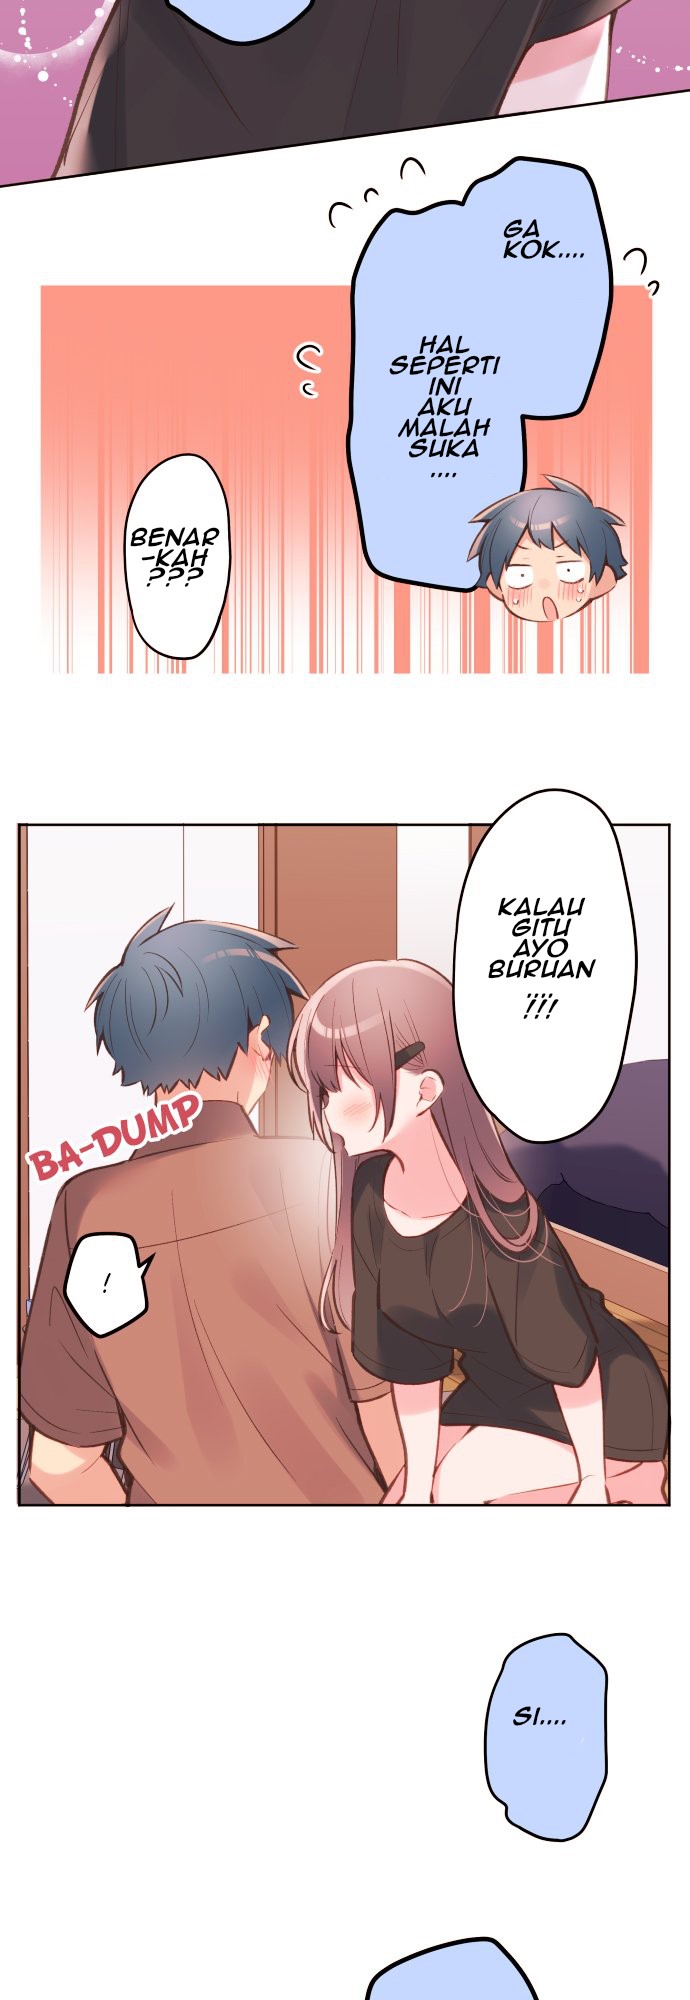 Waka-chan Is Flirty Again Chapter 37 8